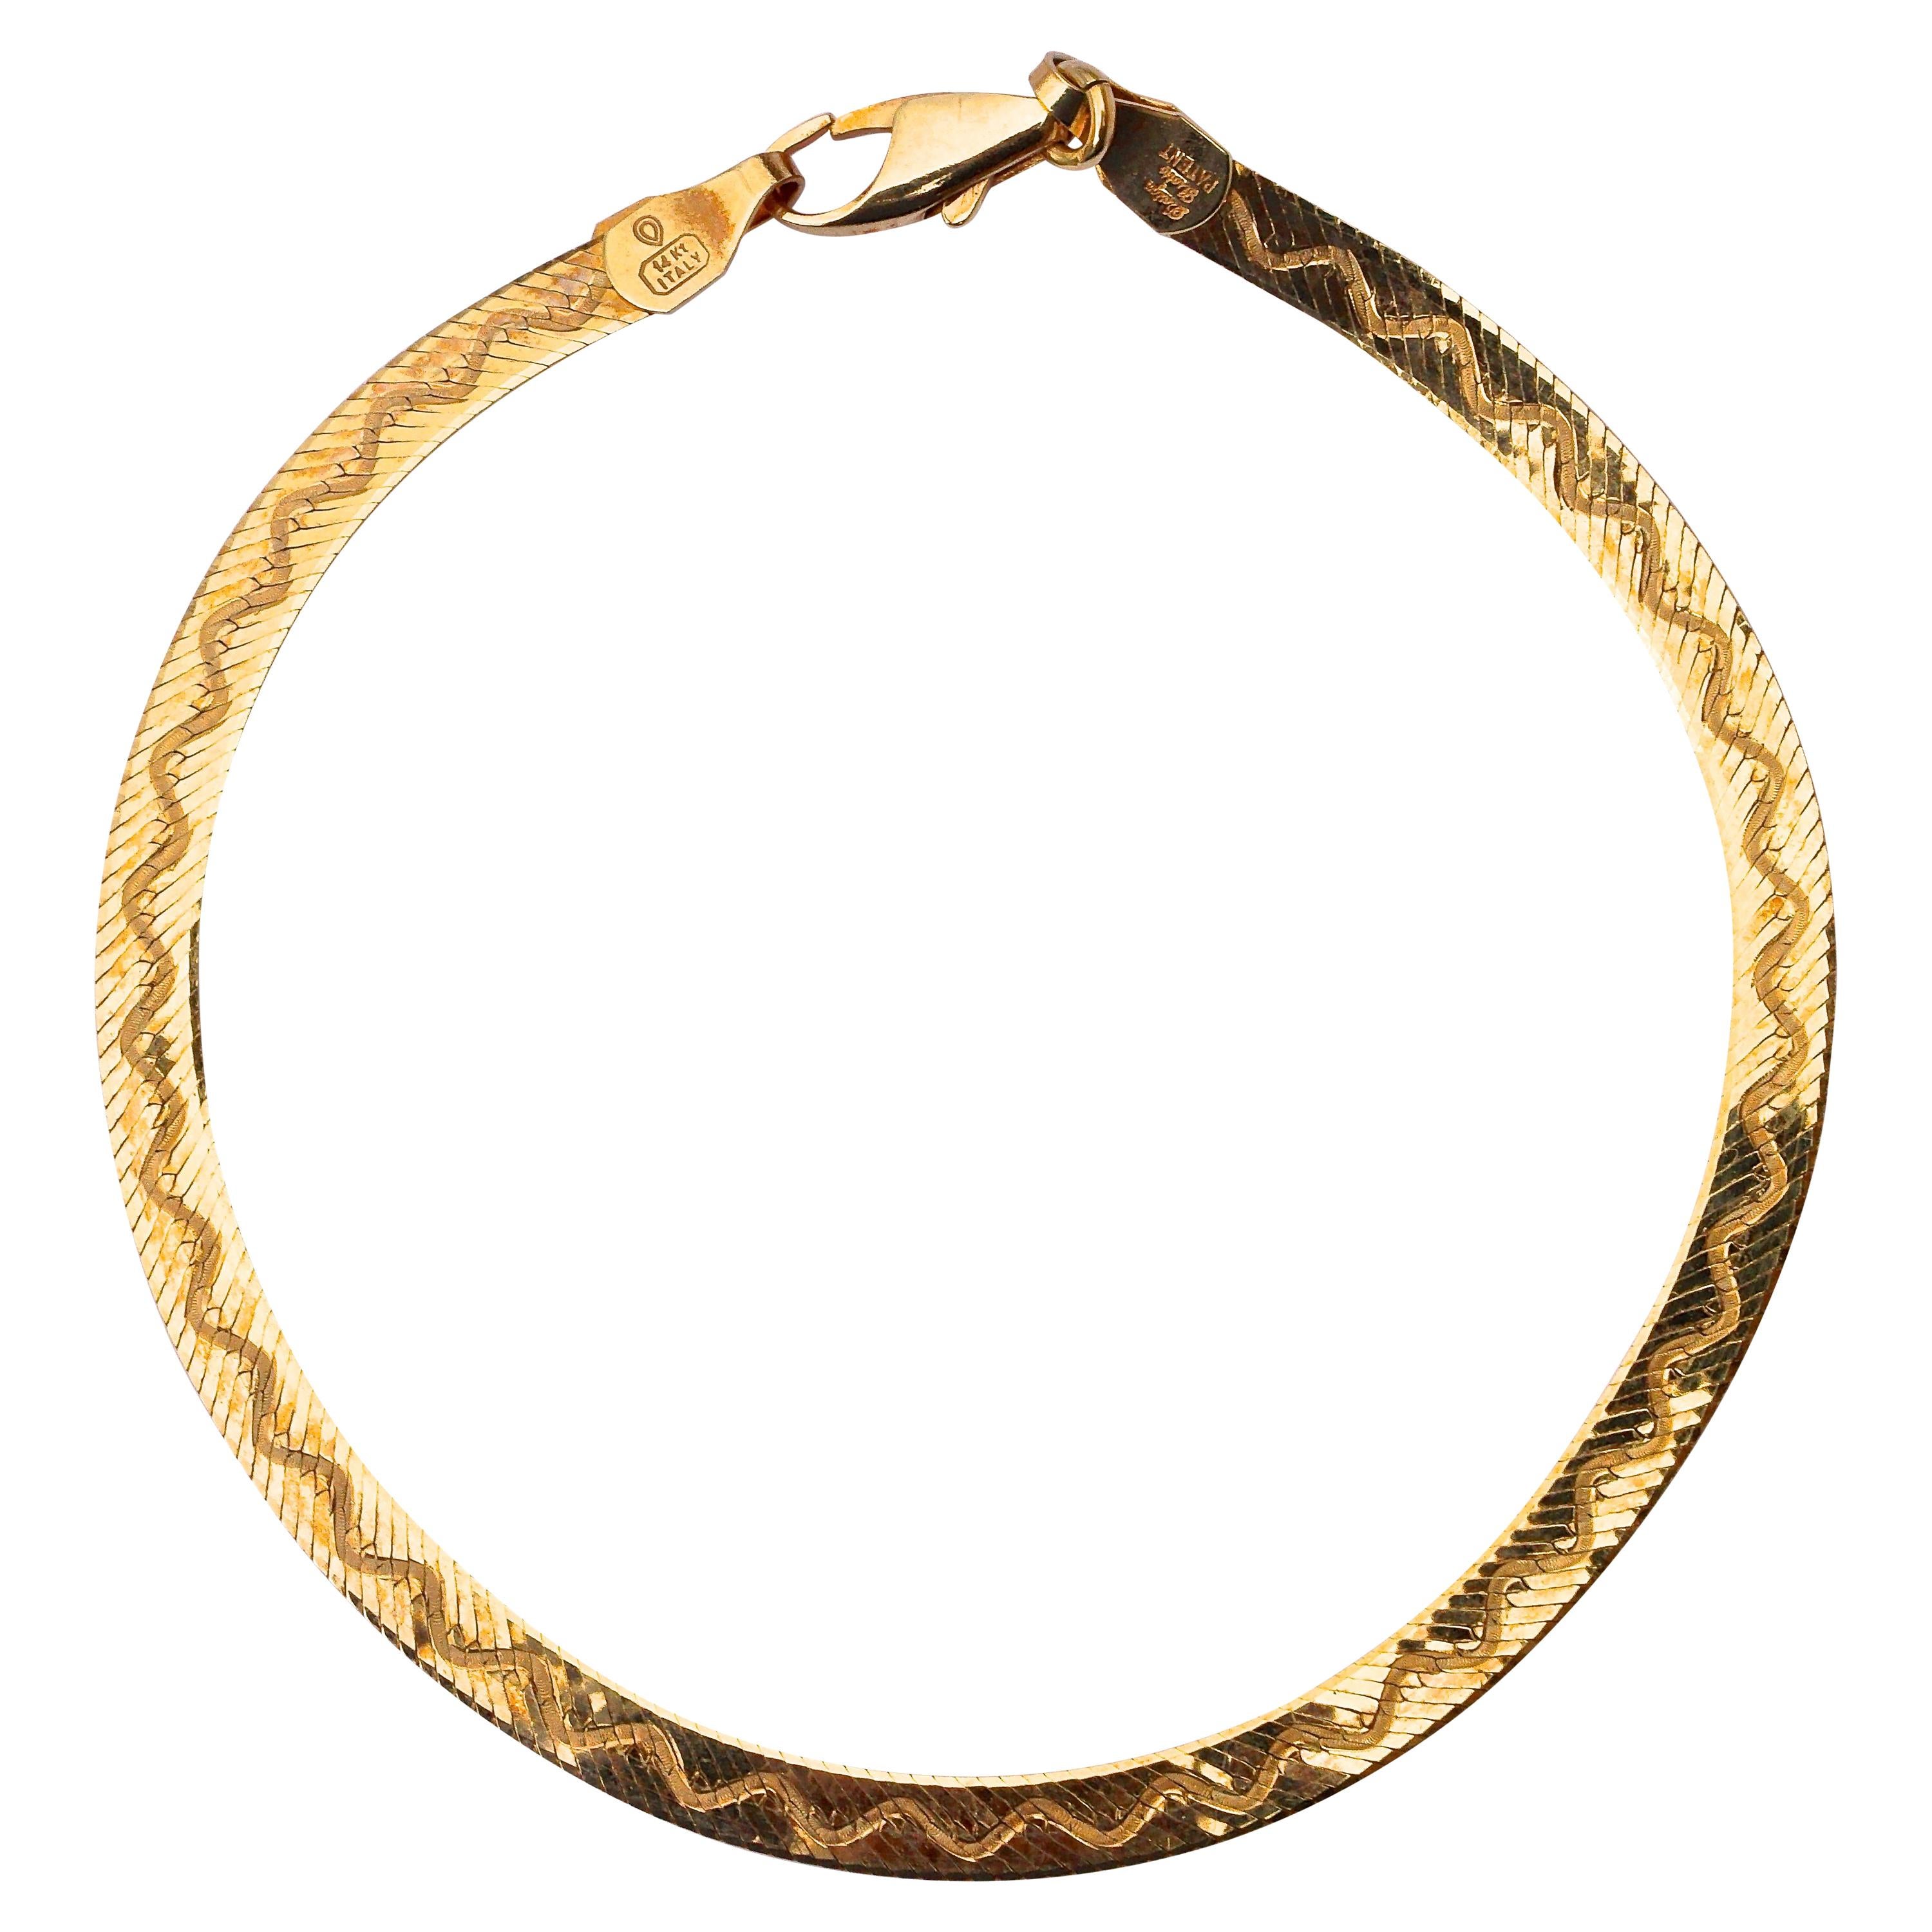  14K Gold Italy Herringbone Wave Design Chain Bracelet